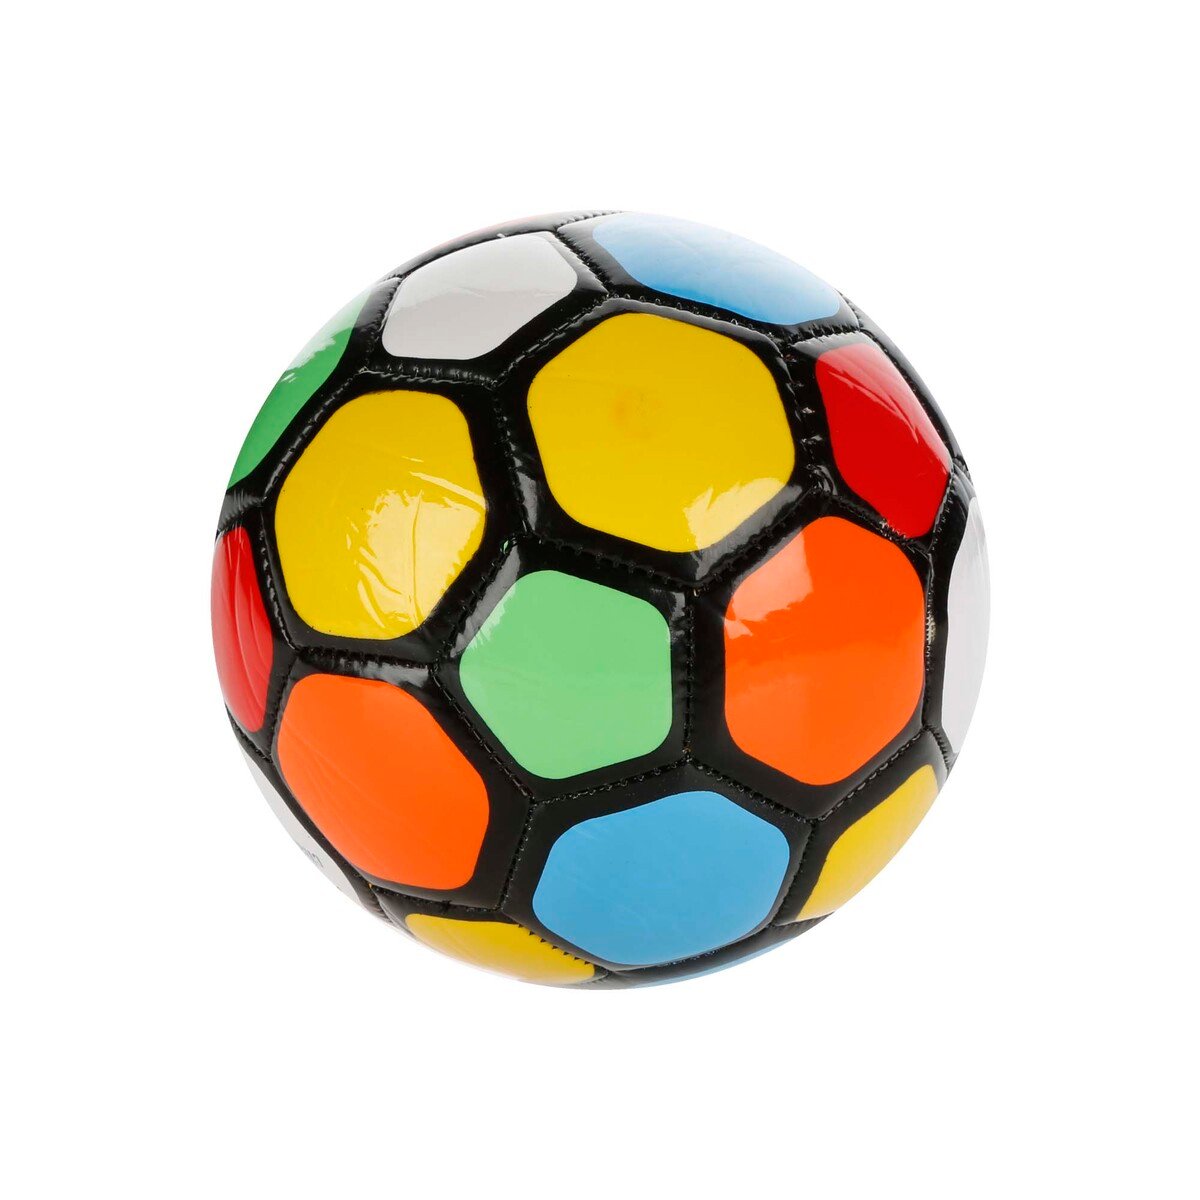 Sports Champion Mini Football 92-3 Assorted Color & Design